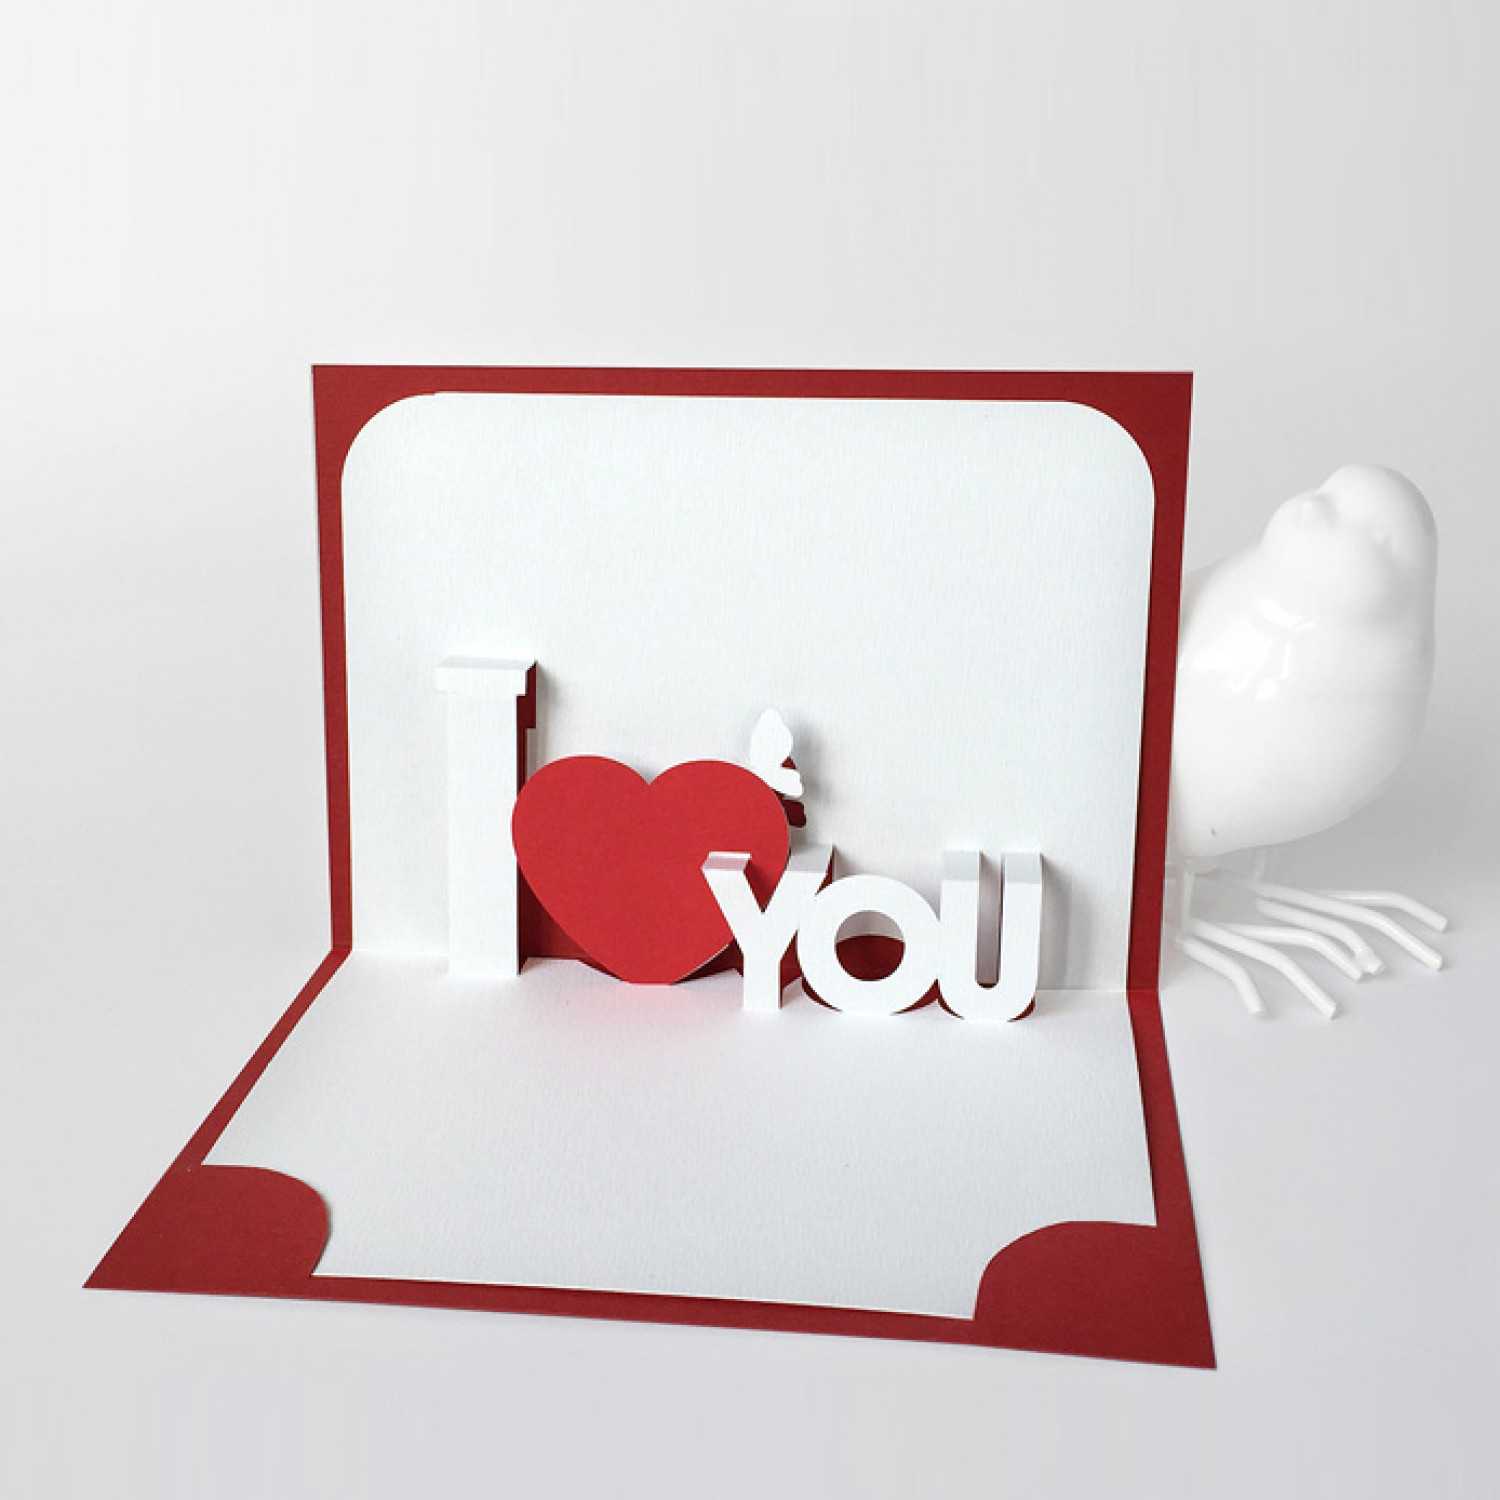 041 Template Ideas Pop Up Cards Templates Iloveu Shocking Throughout 3D Heart Pop Up Card Template Pdf